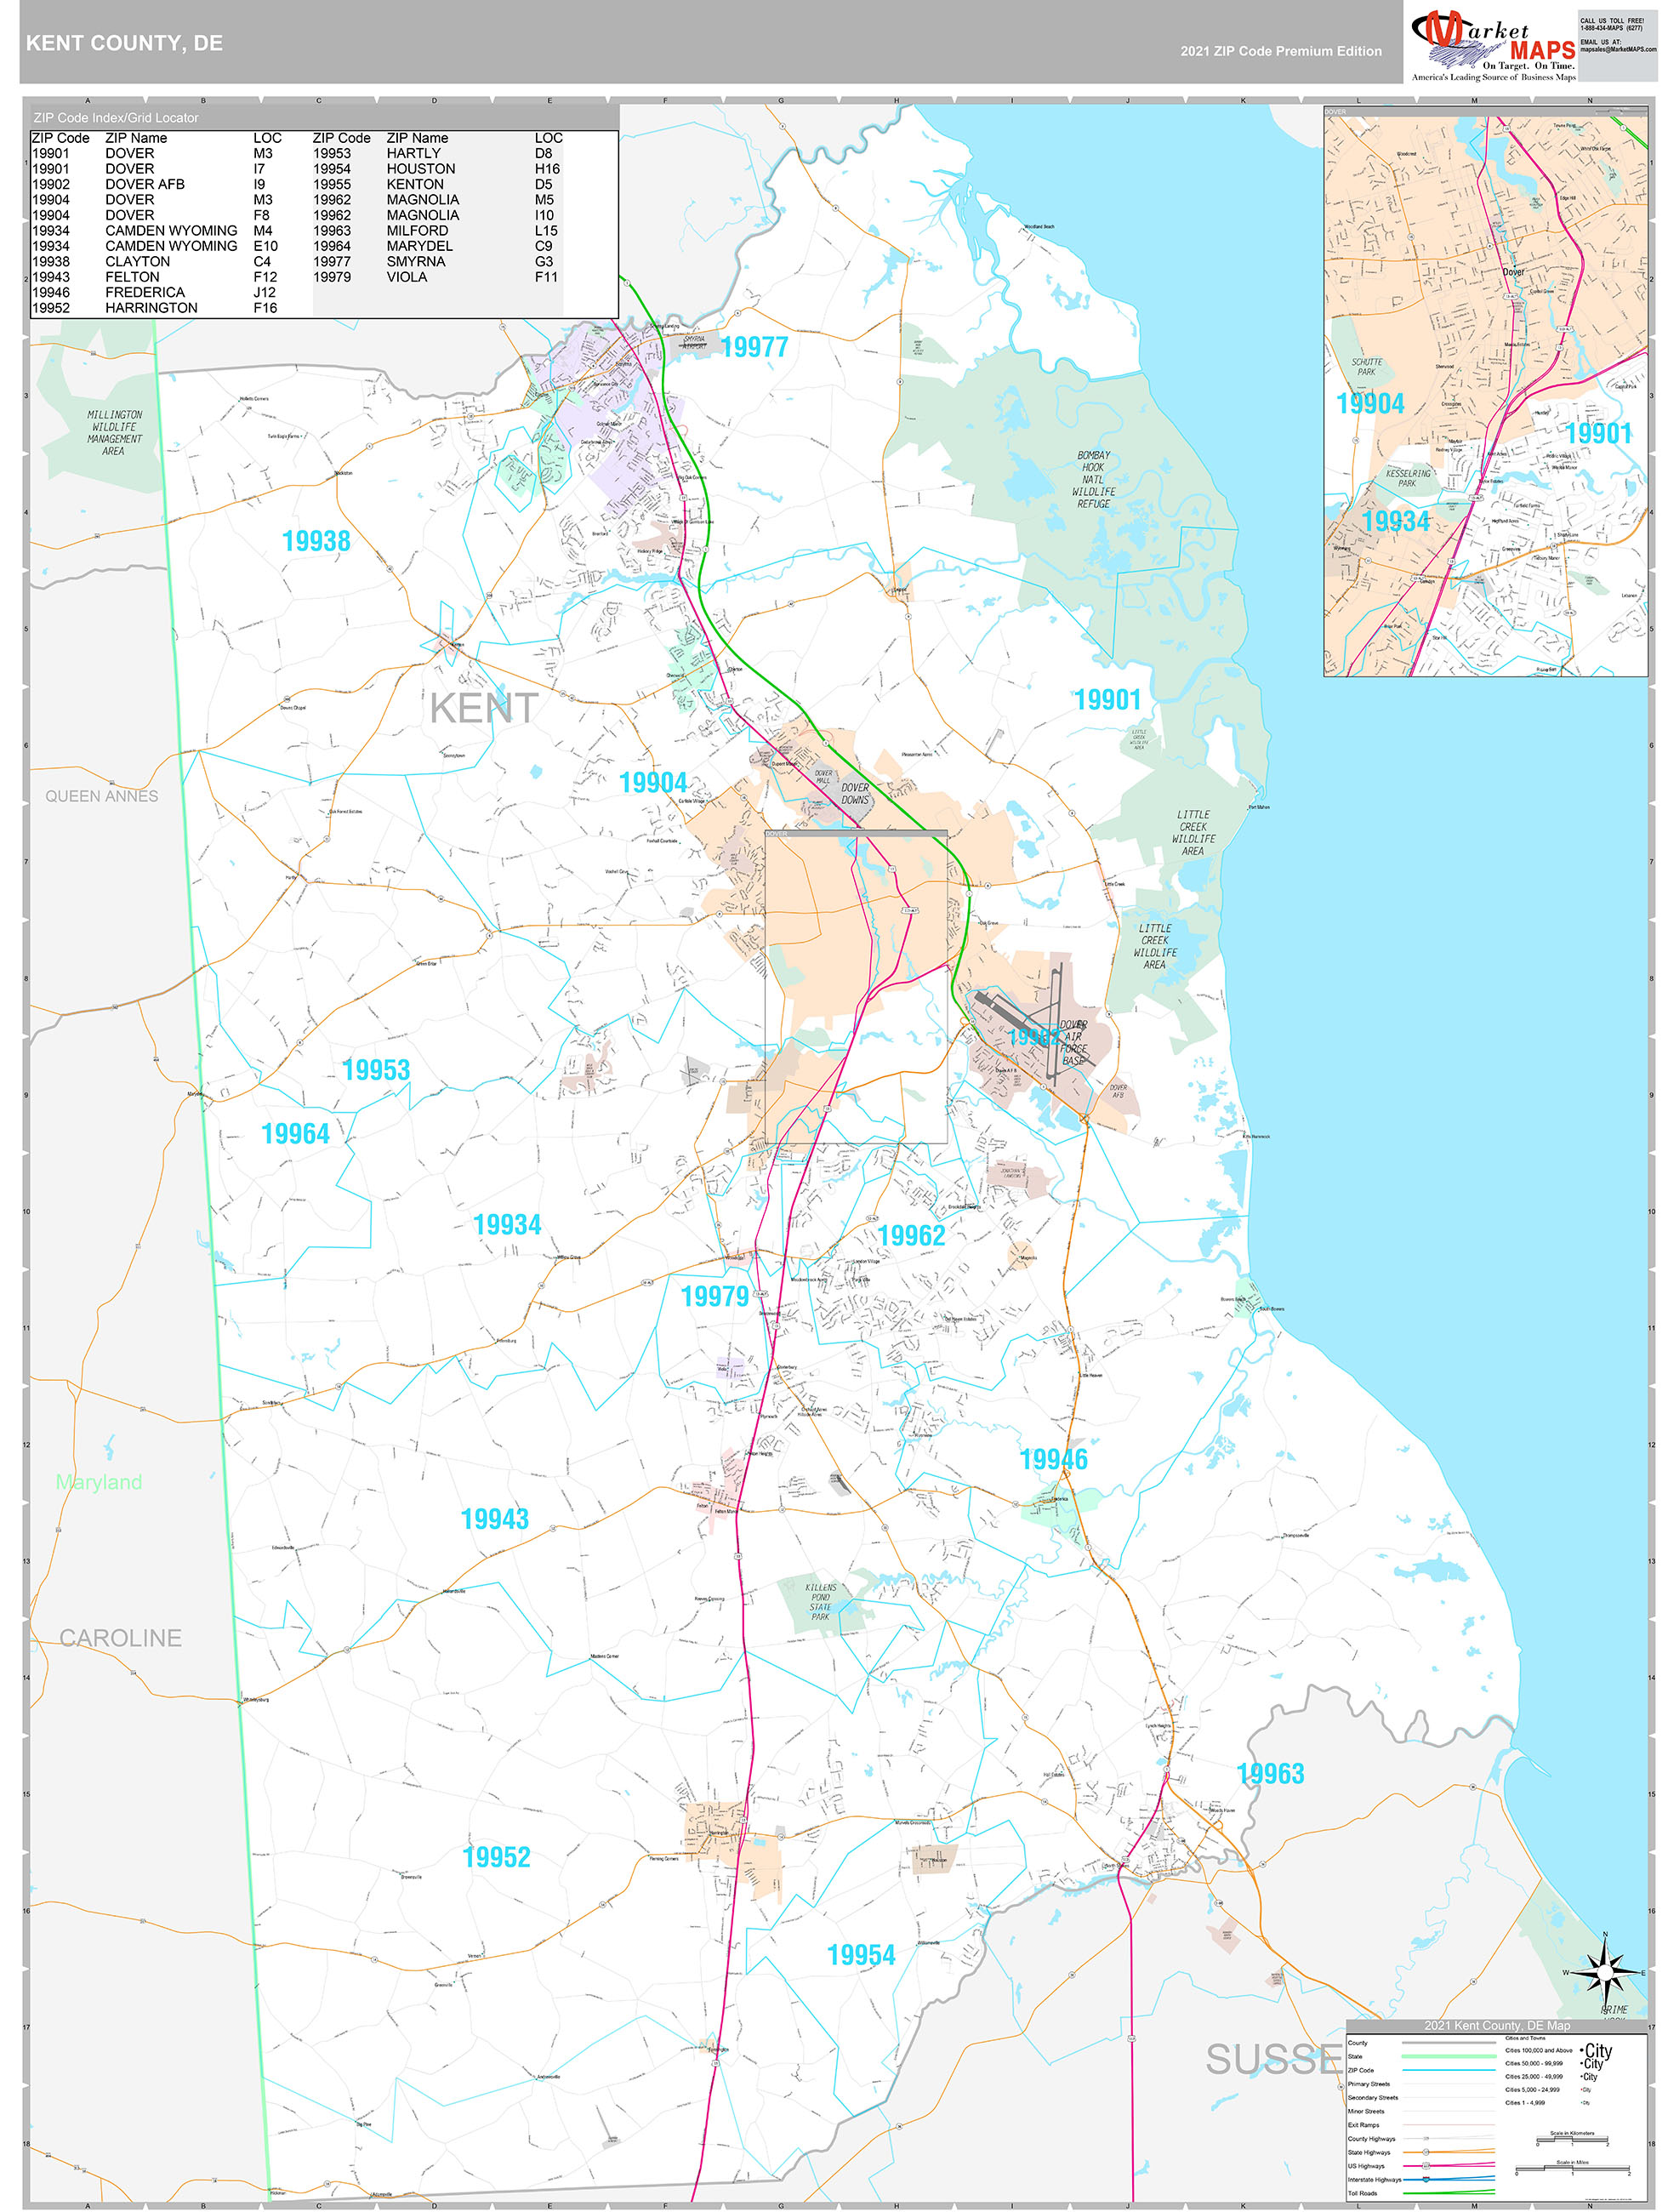 Kent County, DE Wall Map Premium Style by MarketMAPS MapSales